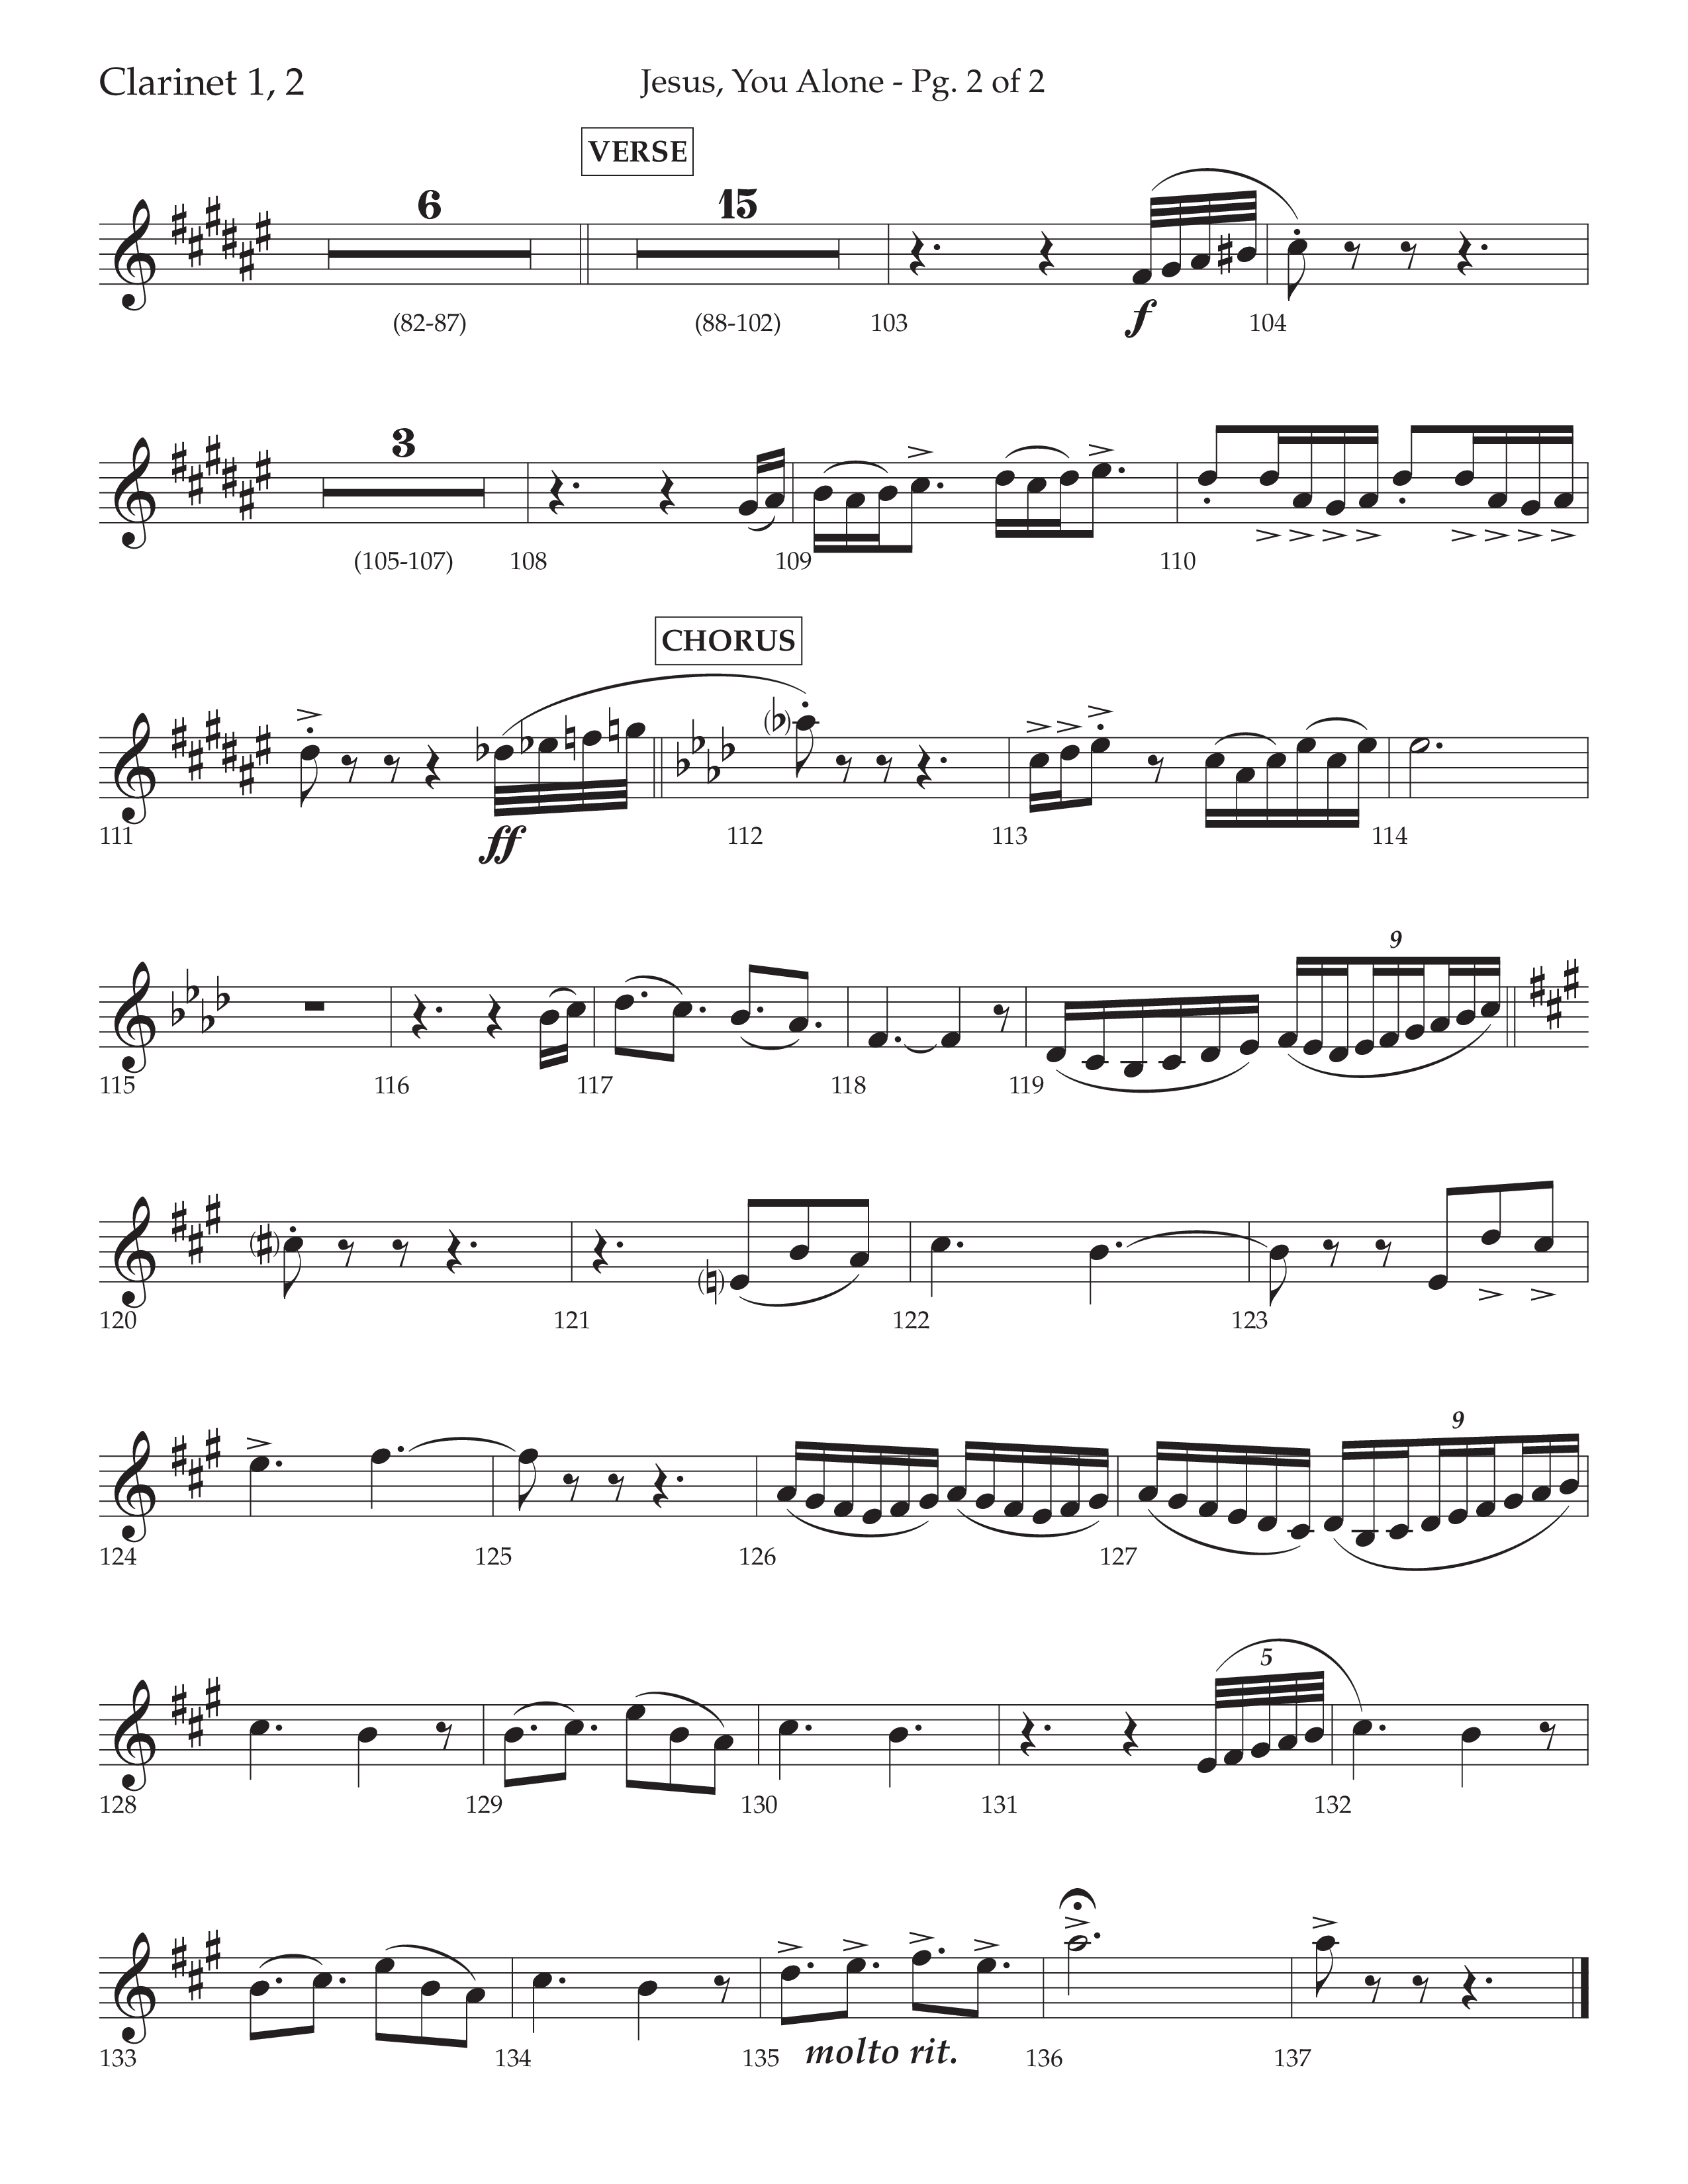 Jesus You Alone (Choral Anthem SATB) Clarinet 1/2 (Lifeway Choral / Arr. David Wise / Orch. Bradley Knight)